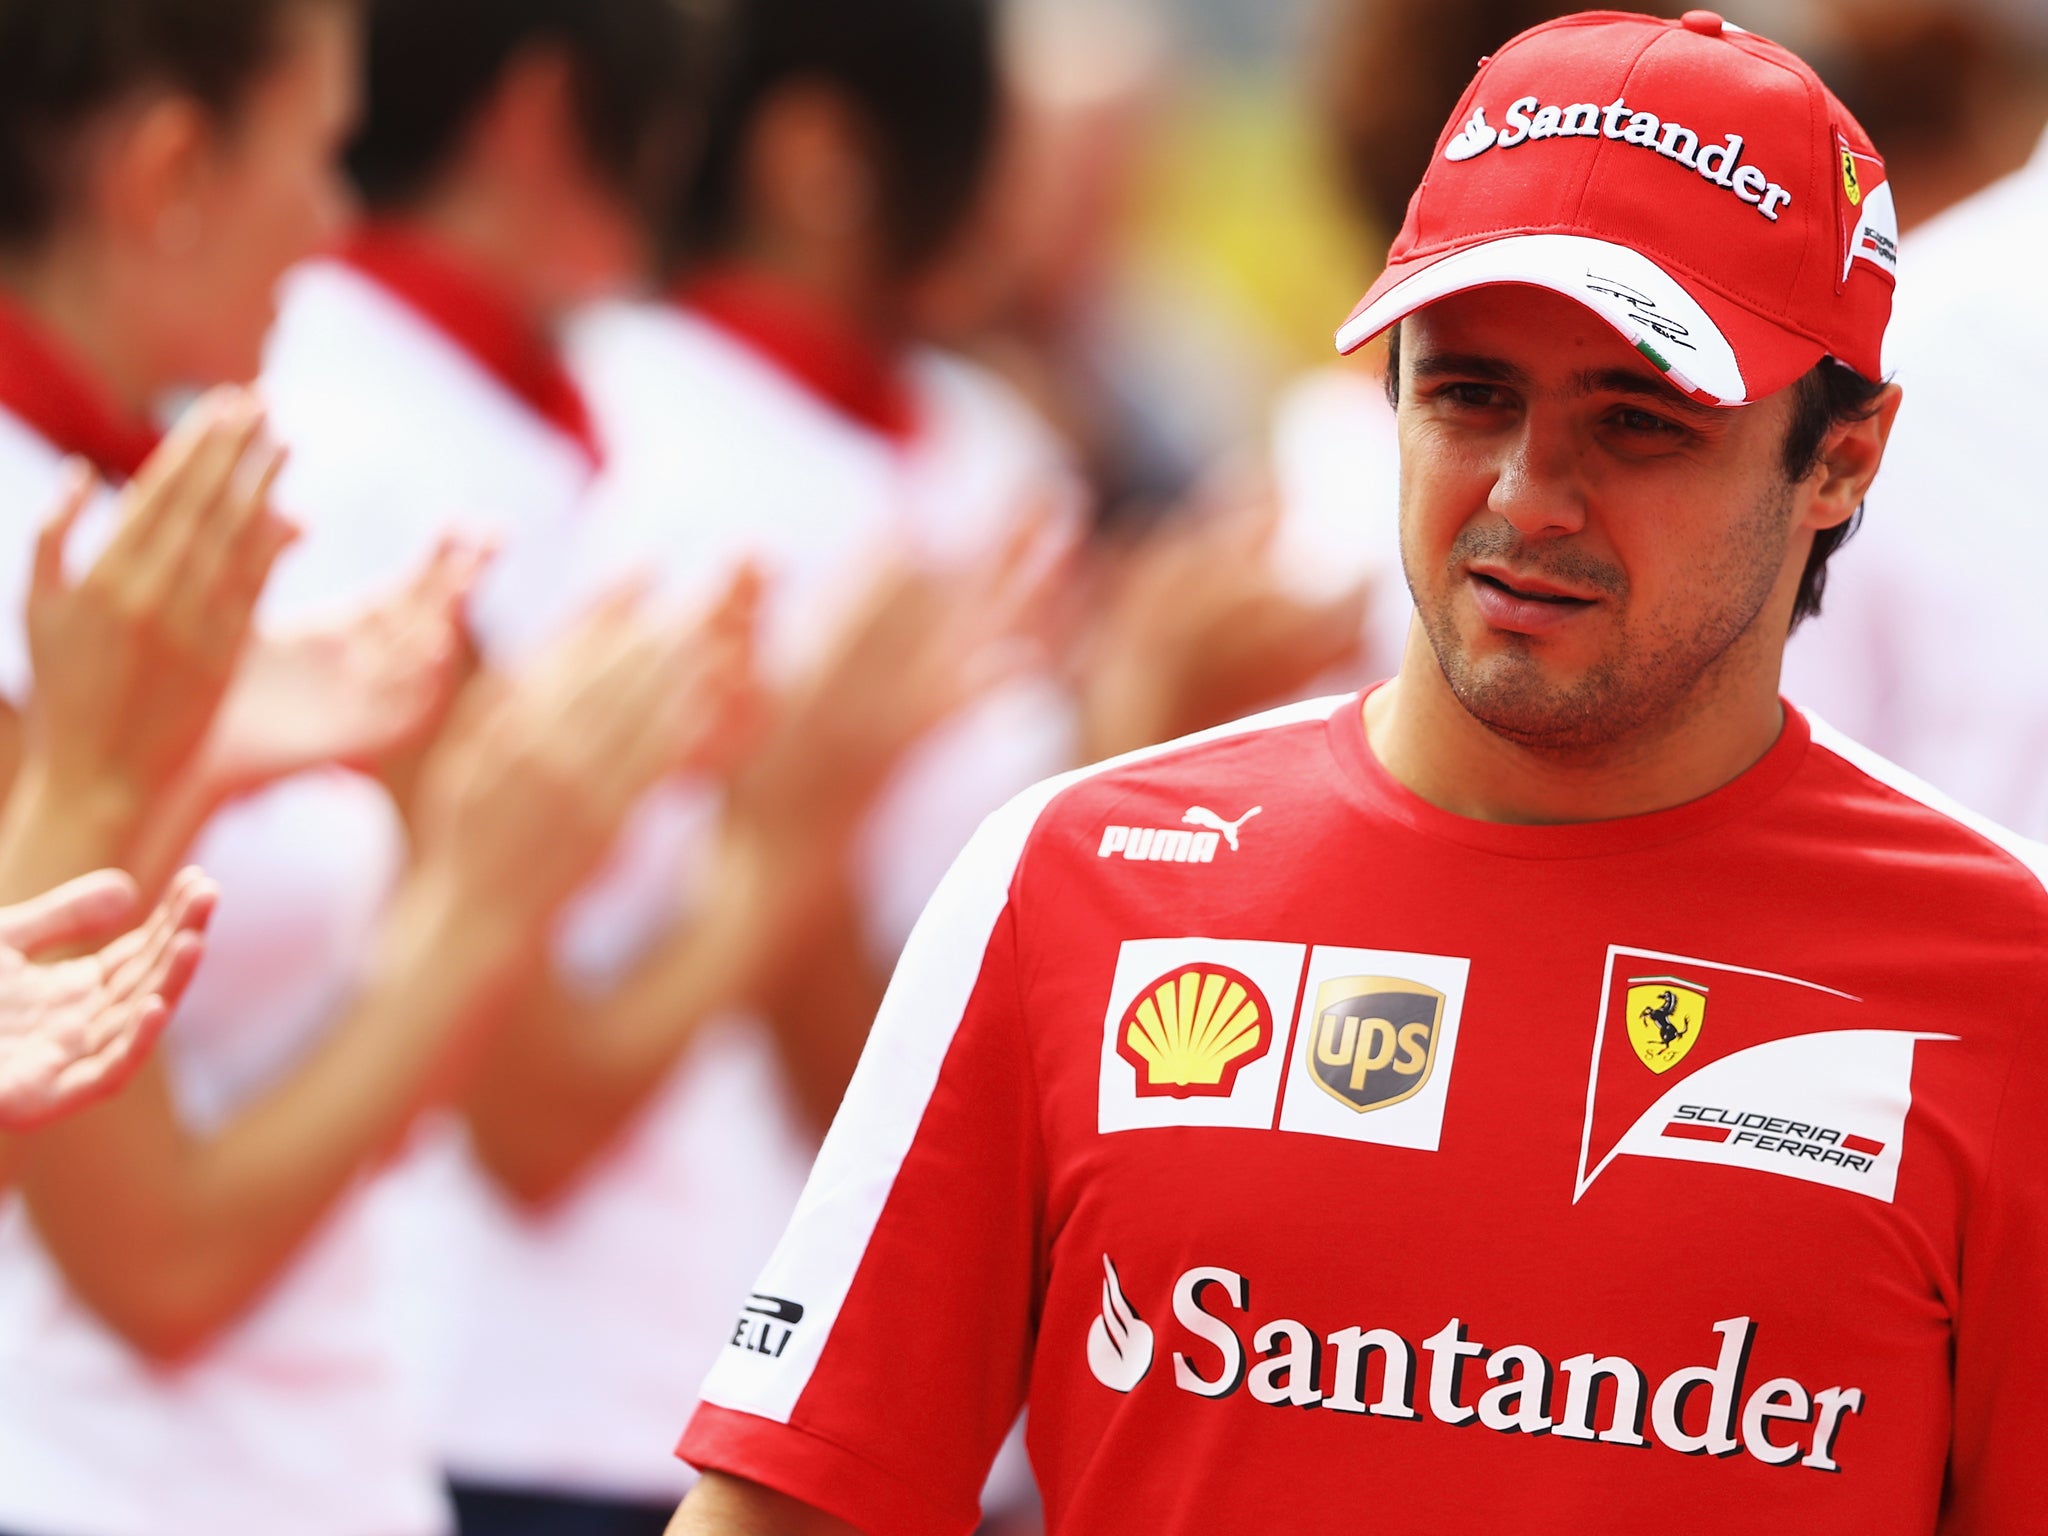 Felipe Massa could trade place with Raikkonen